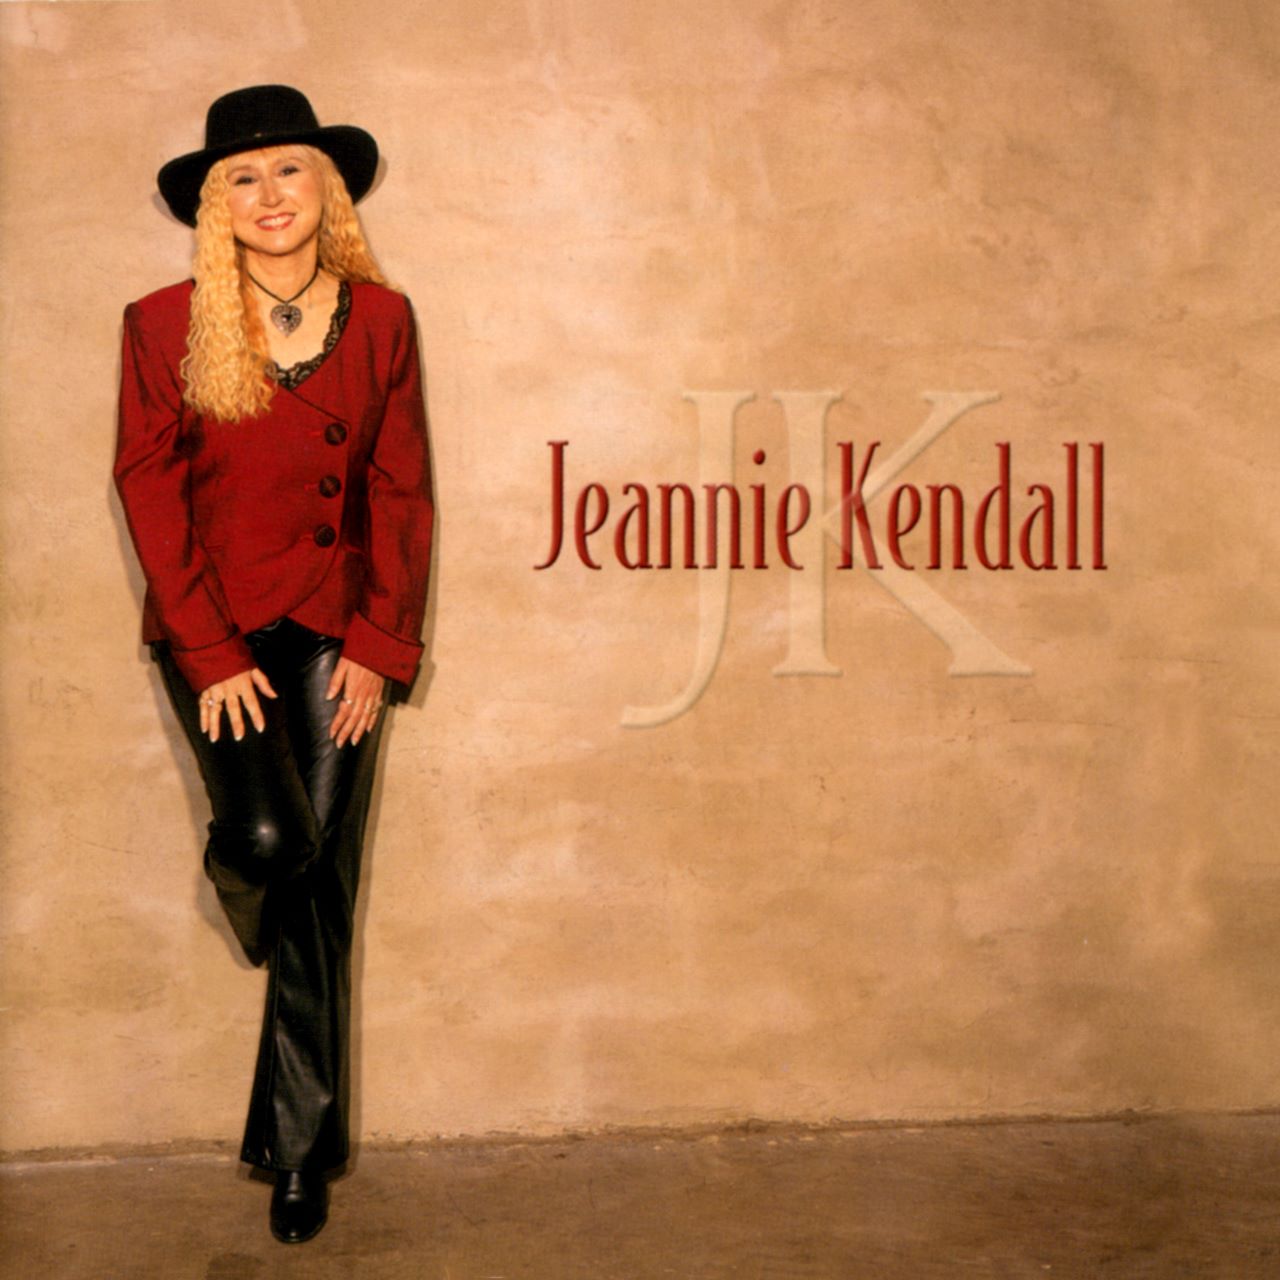 Jeannie Kendall - JK cover album